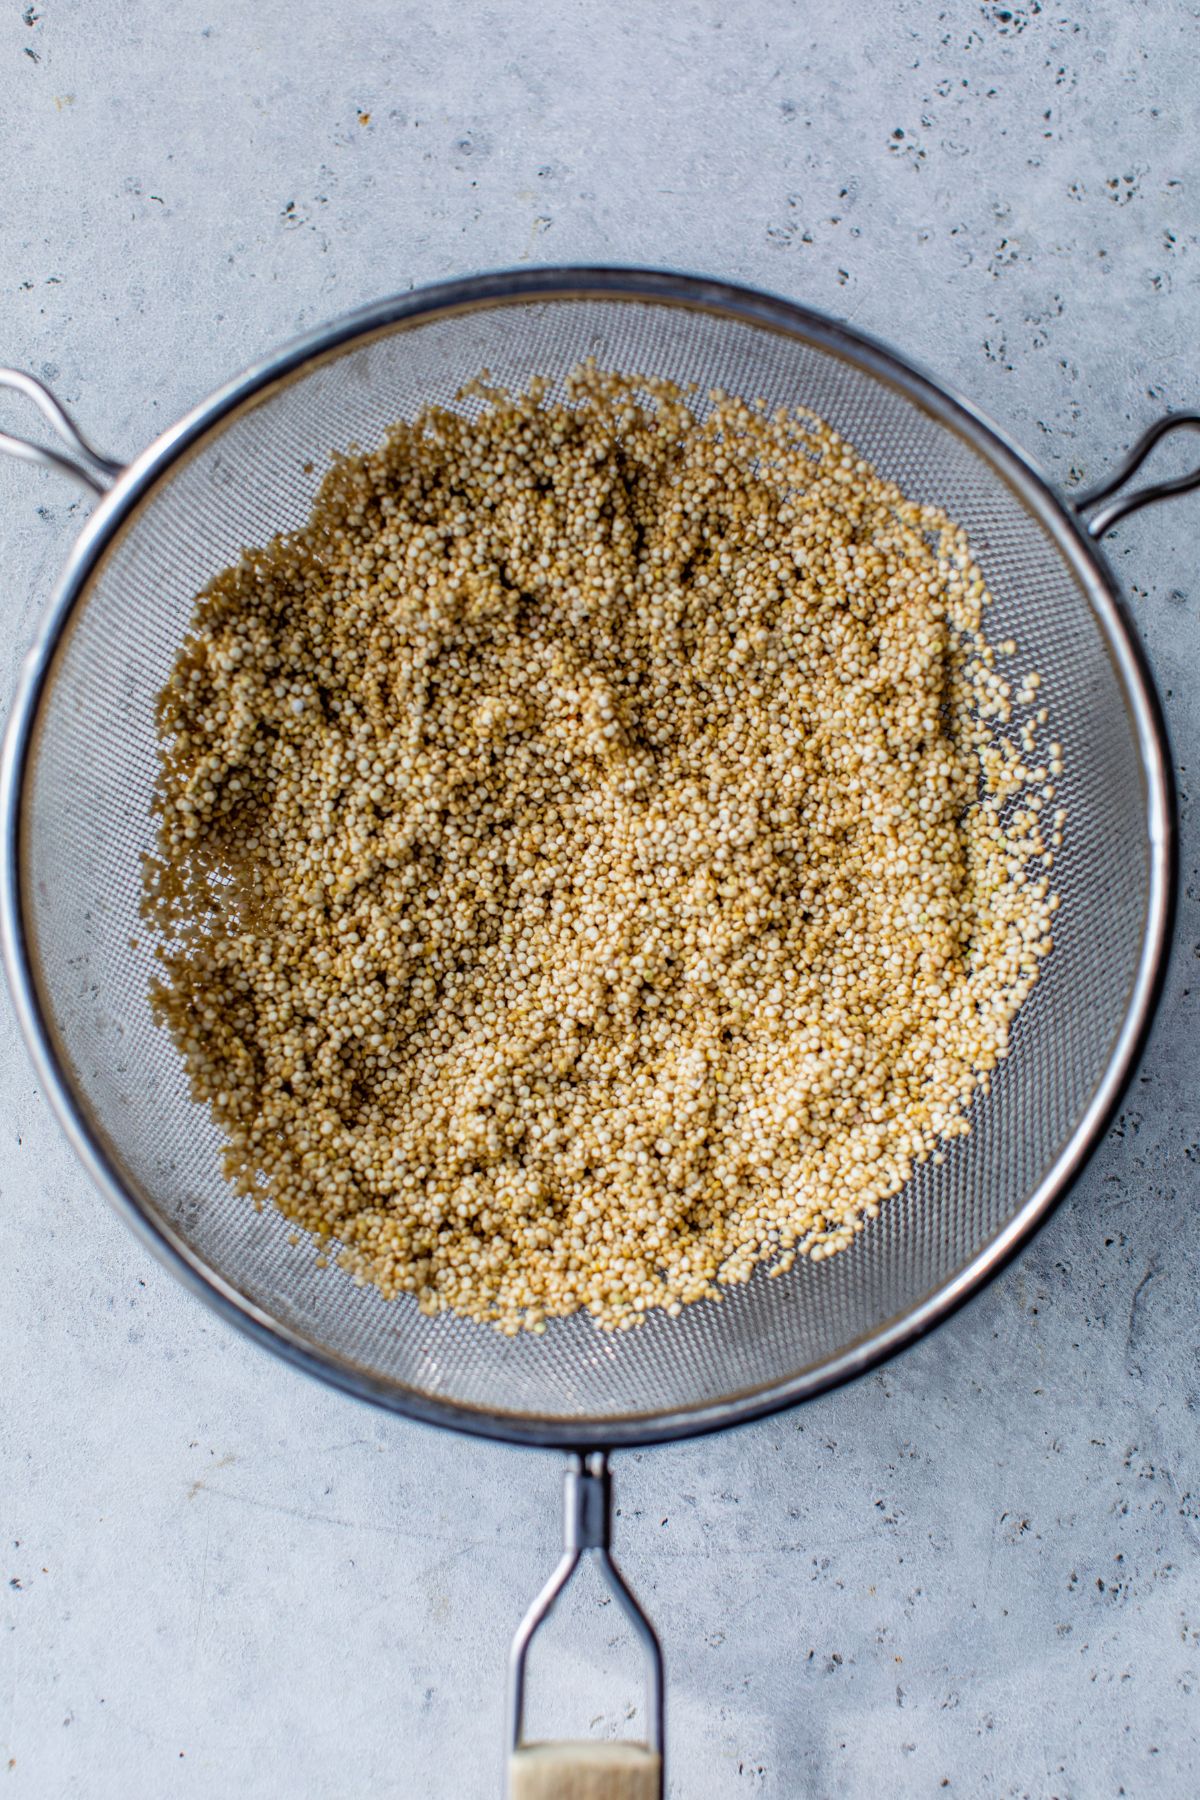 Rinsing quinoa in a mesh strainer.